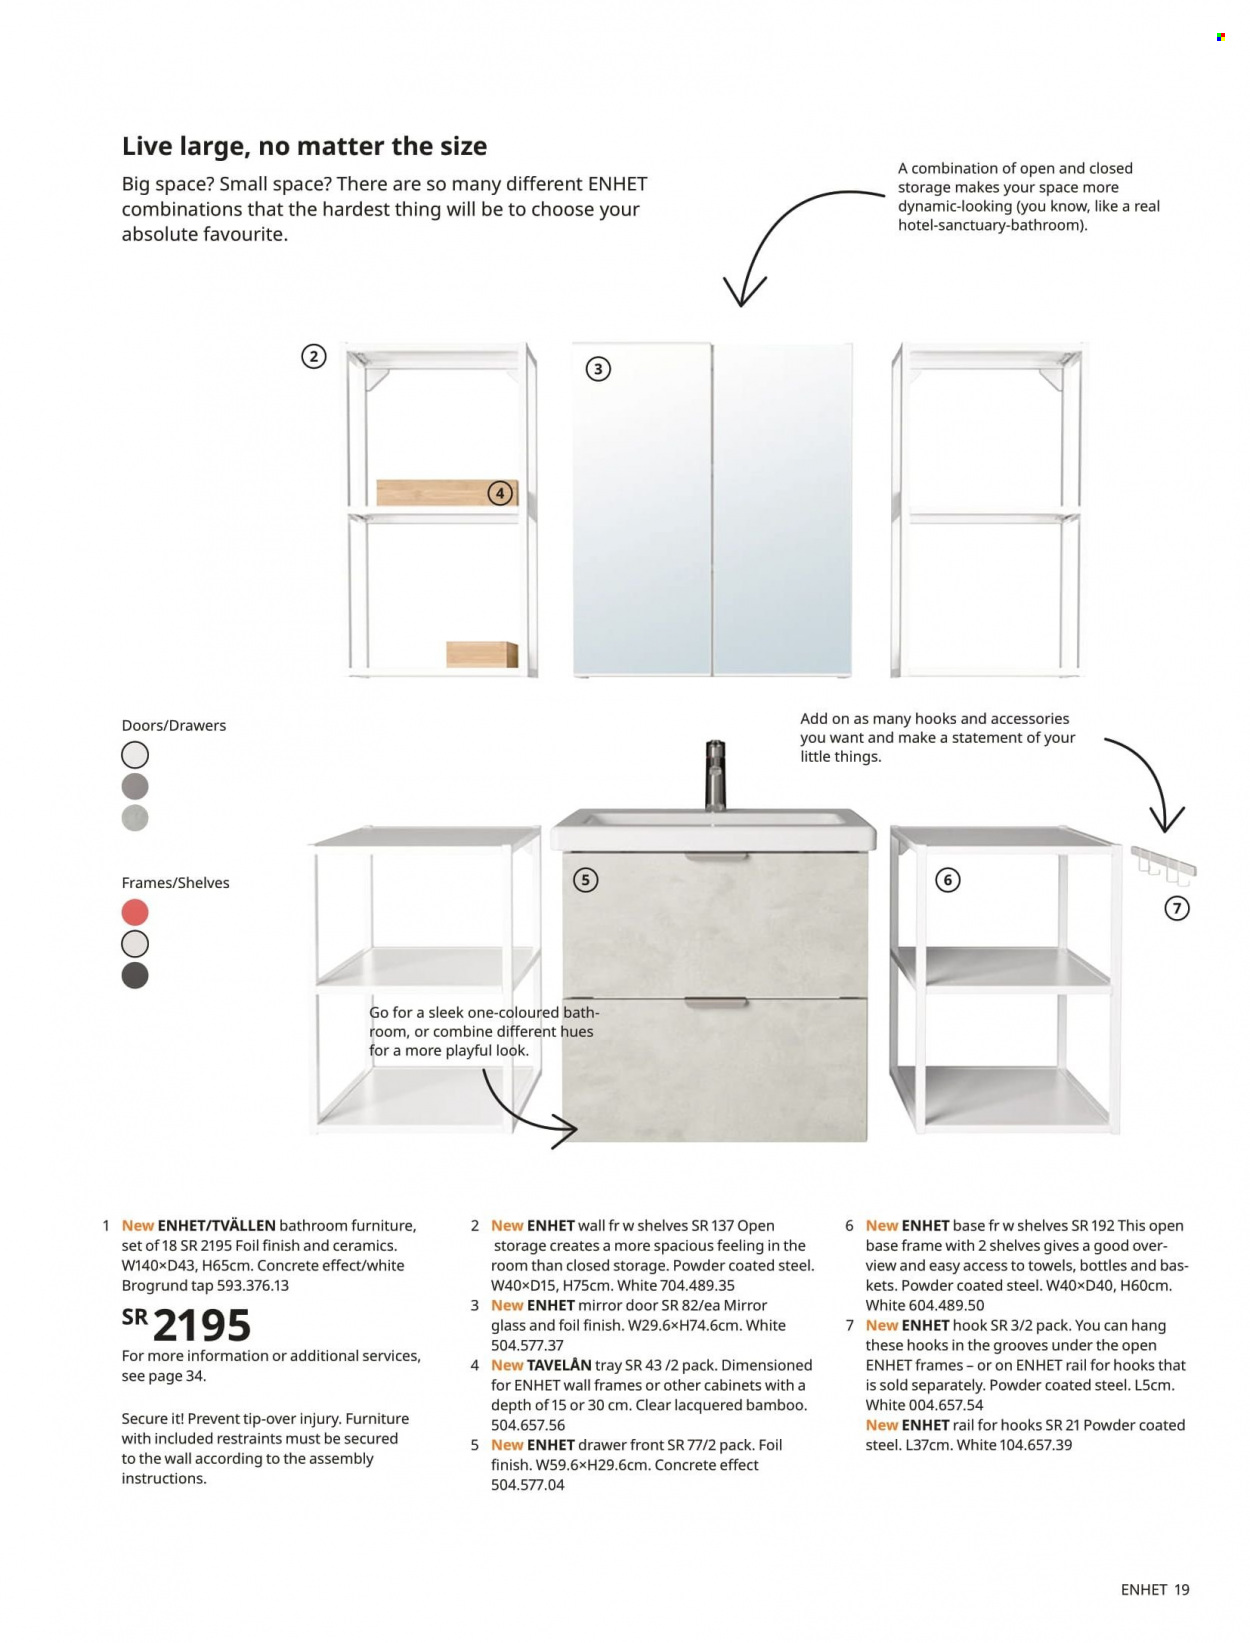 IKEA flyer . Page 19.